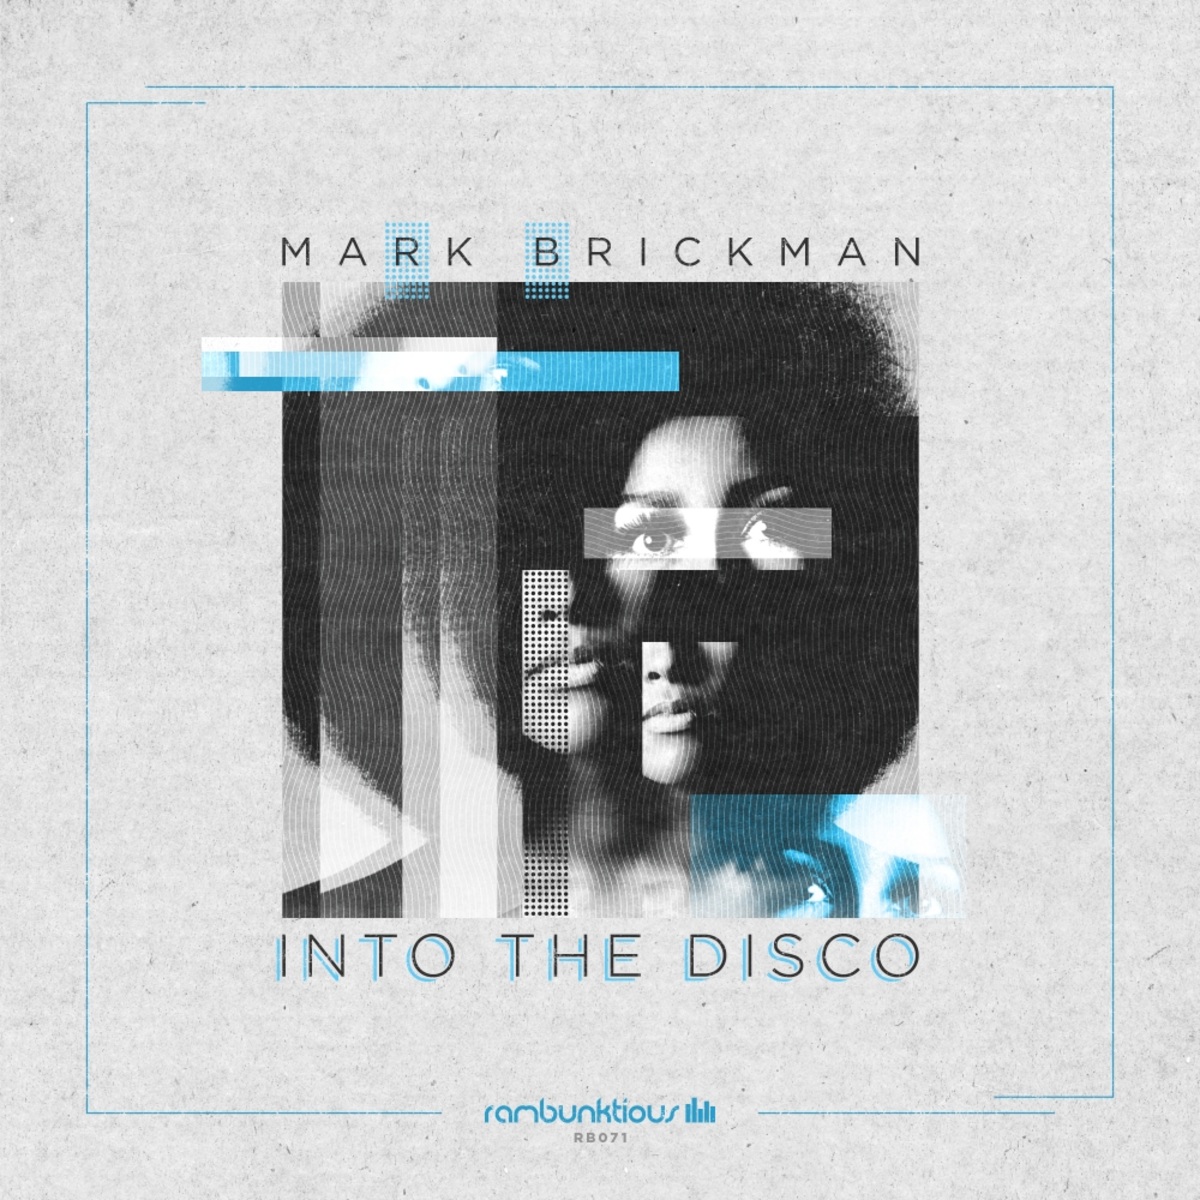 DJ Mark Brickman - Into The Disco / RaMBunktious (Miami)